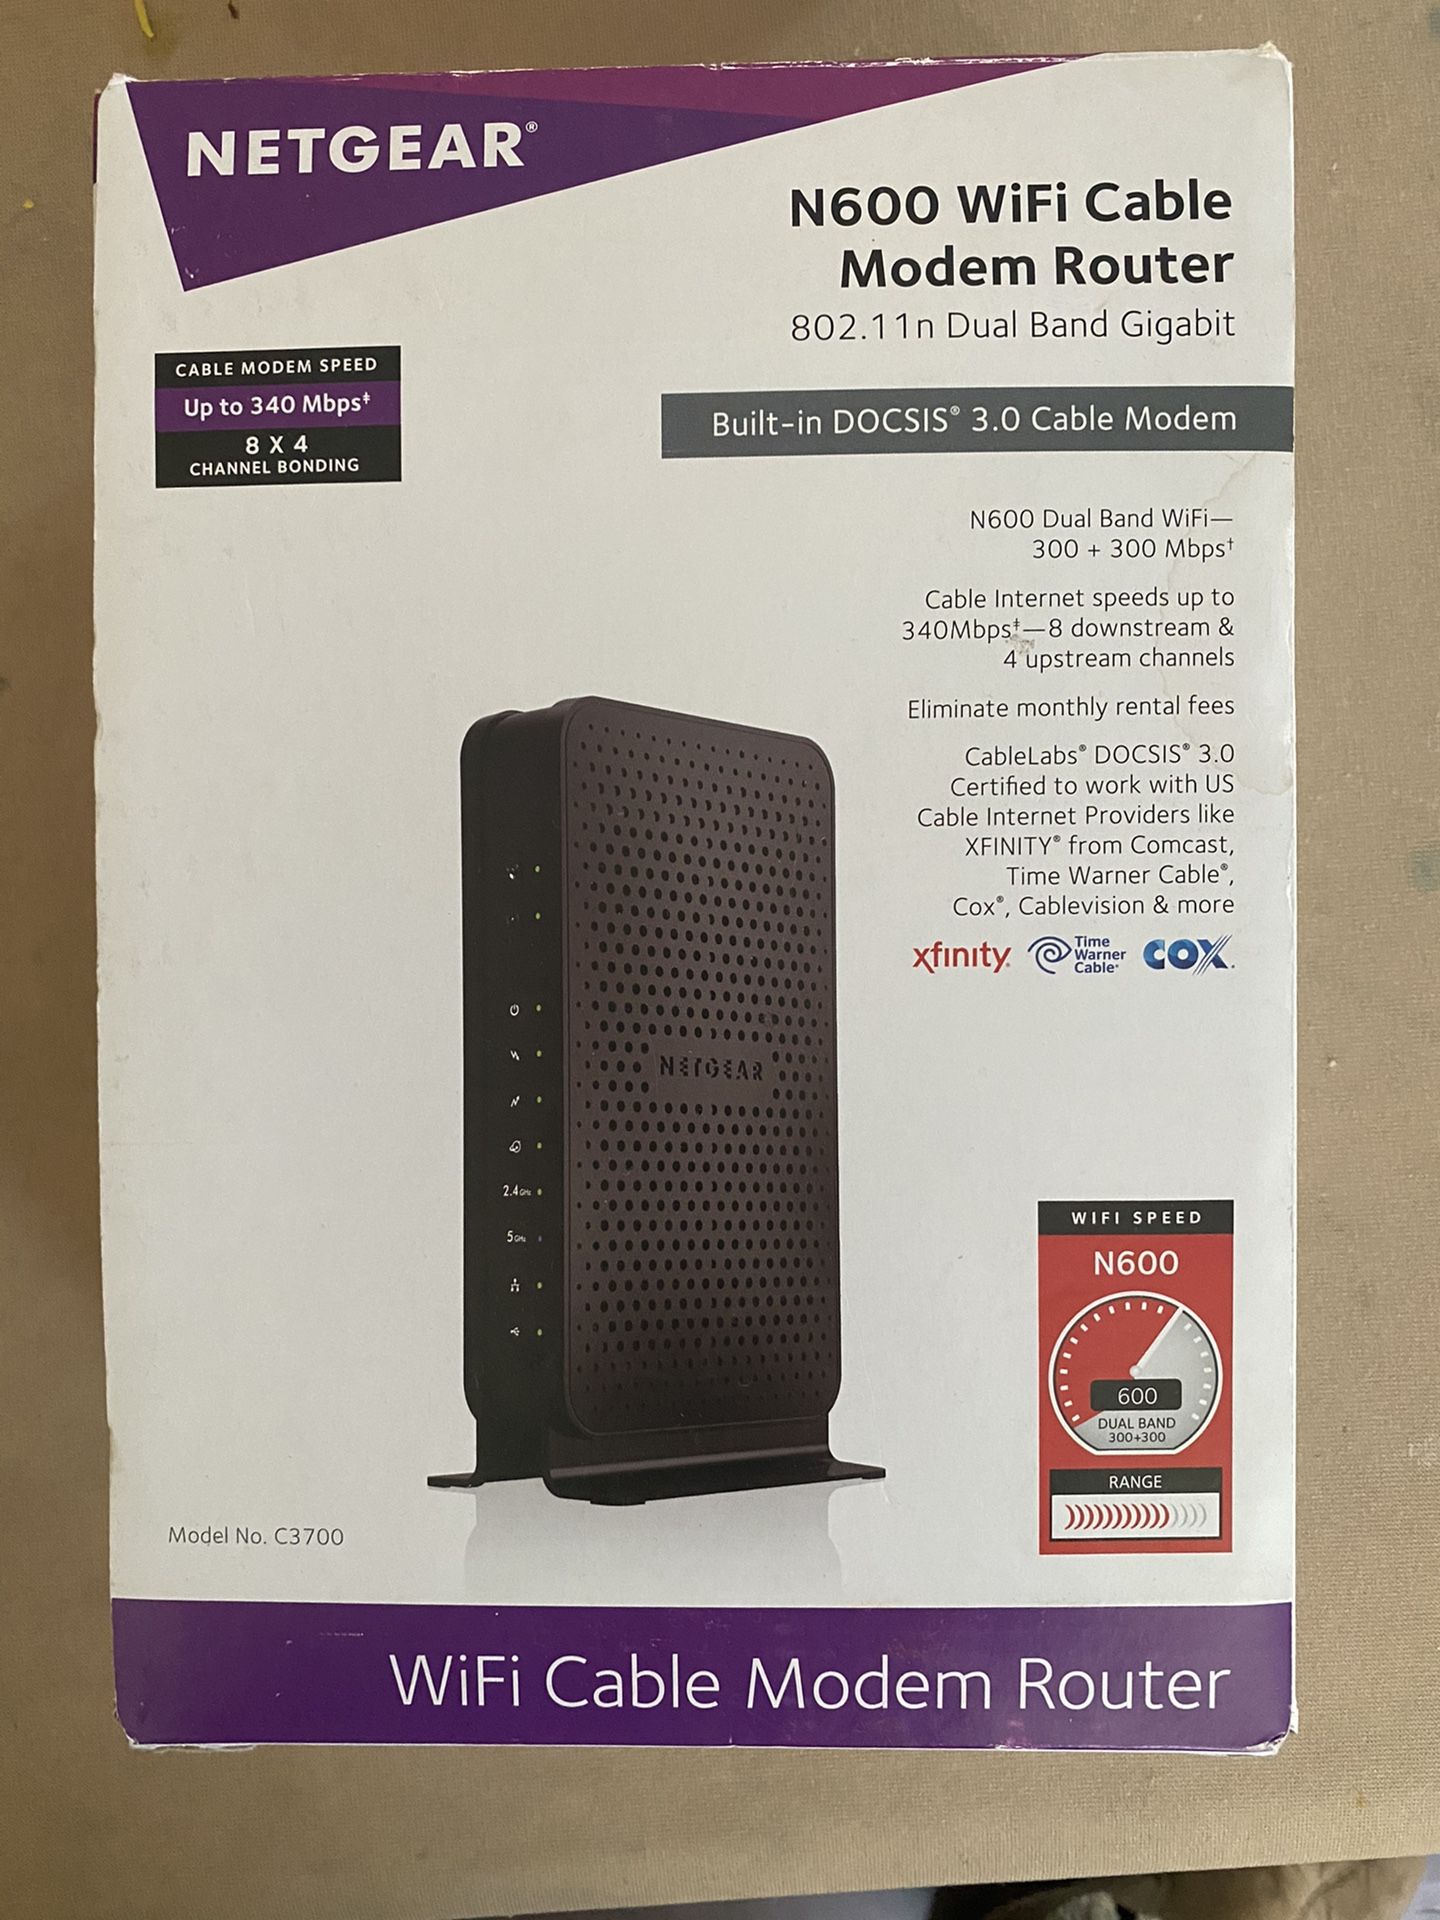 Netgear WiFi cable modem router